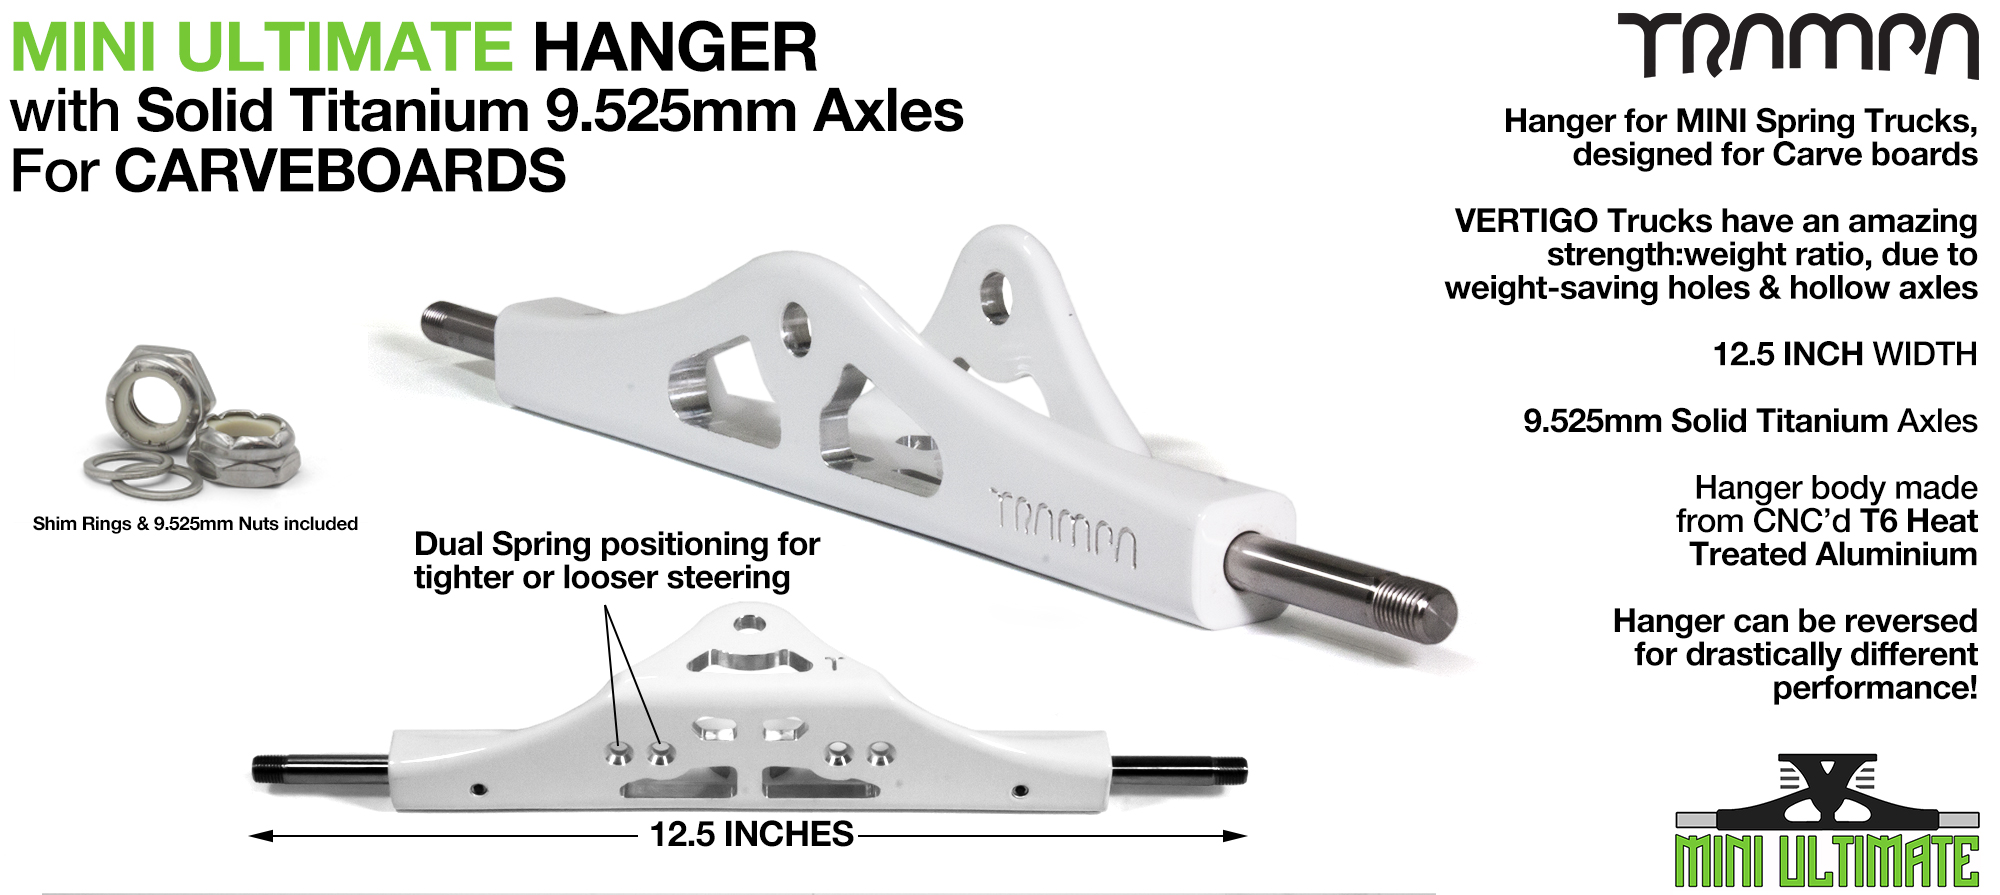 ULTIMATE MINI Hanger - 9.525mm TITANIUM Axles, Powder Coated White & CNC'd light 